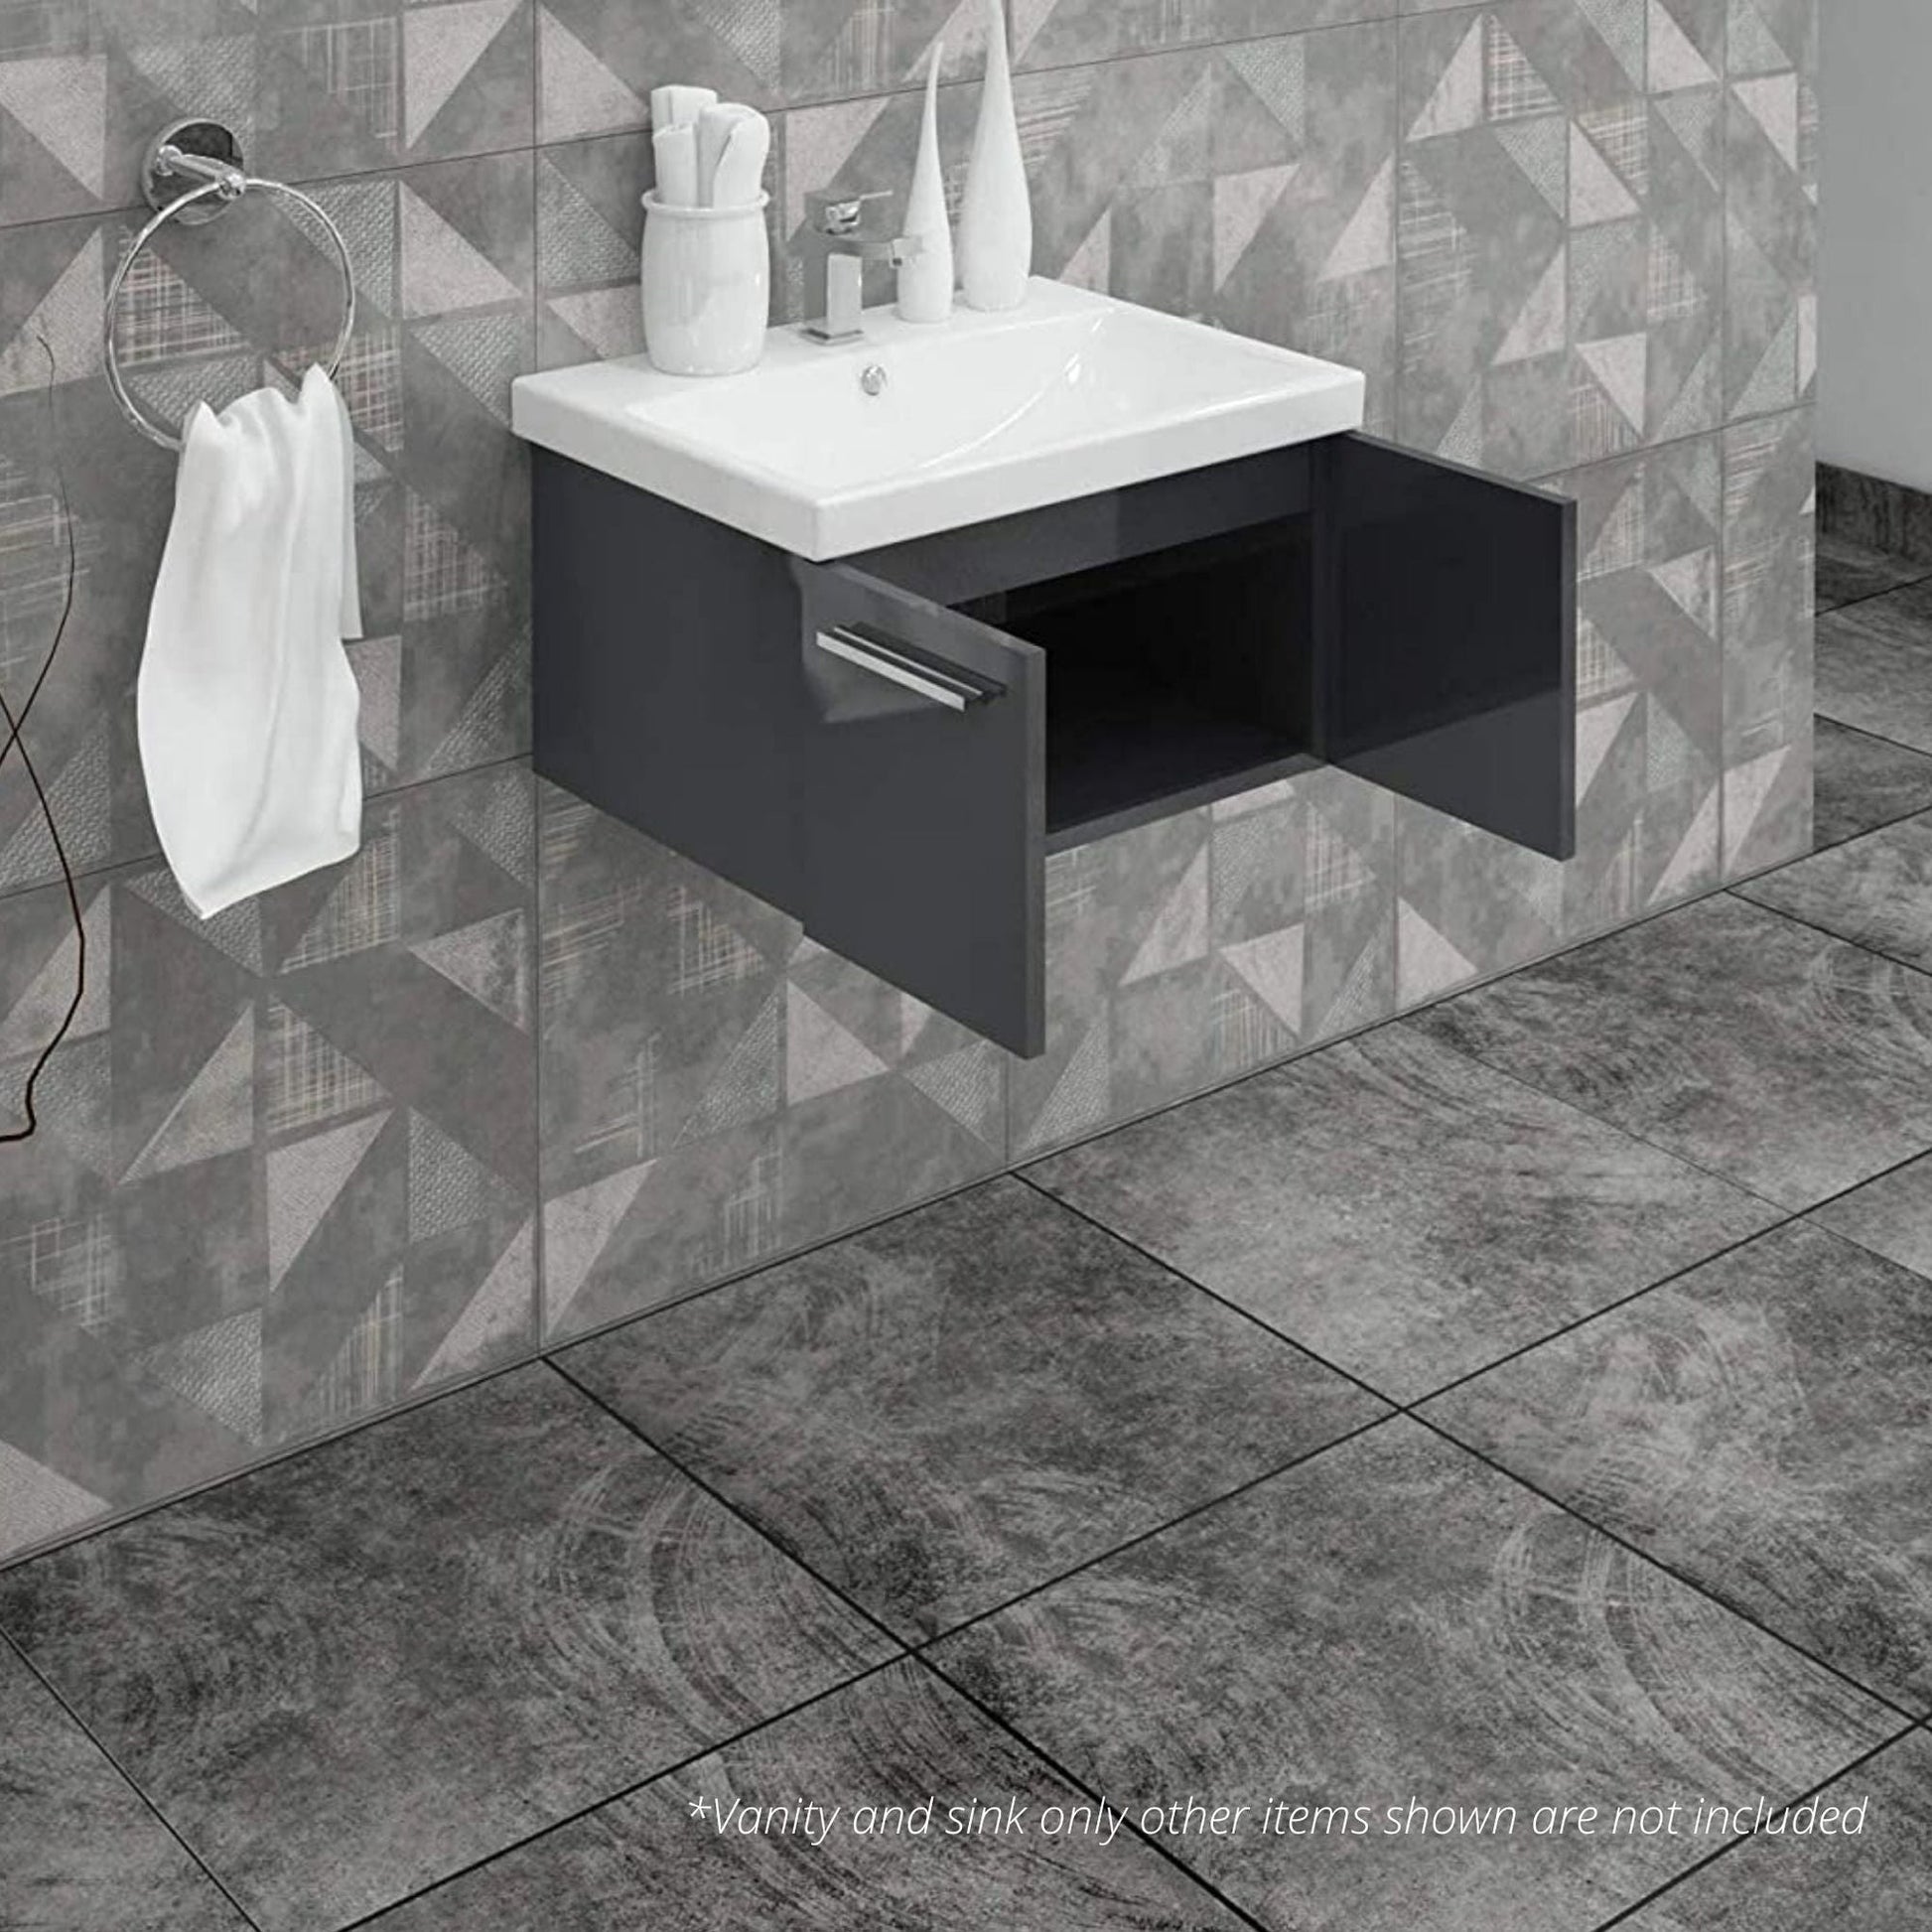 Casa Mare Aspe 32" Glossy Gray Wall-Mounted Bathroom Vanity and Ceramic Sink Combo